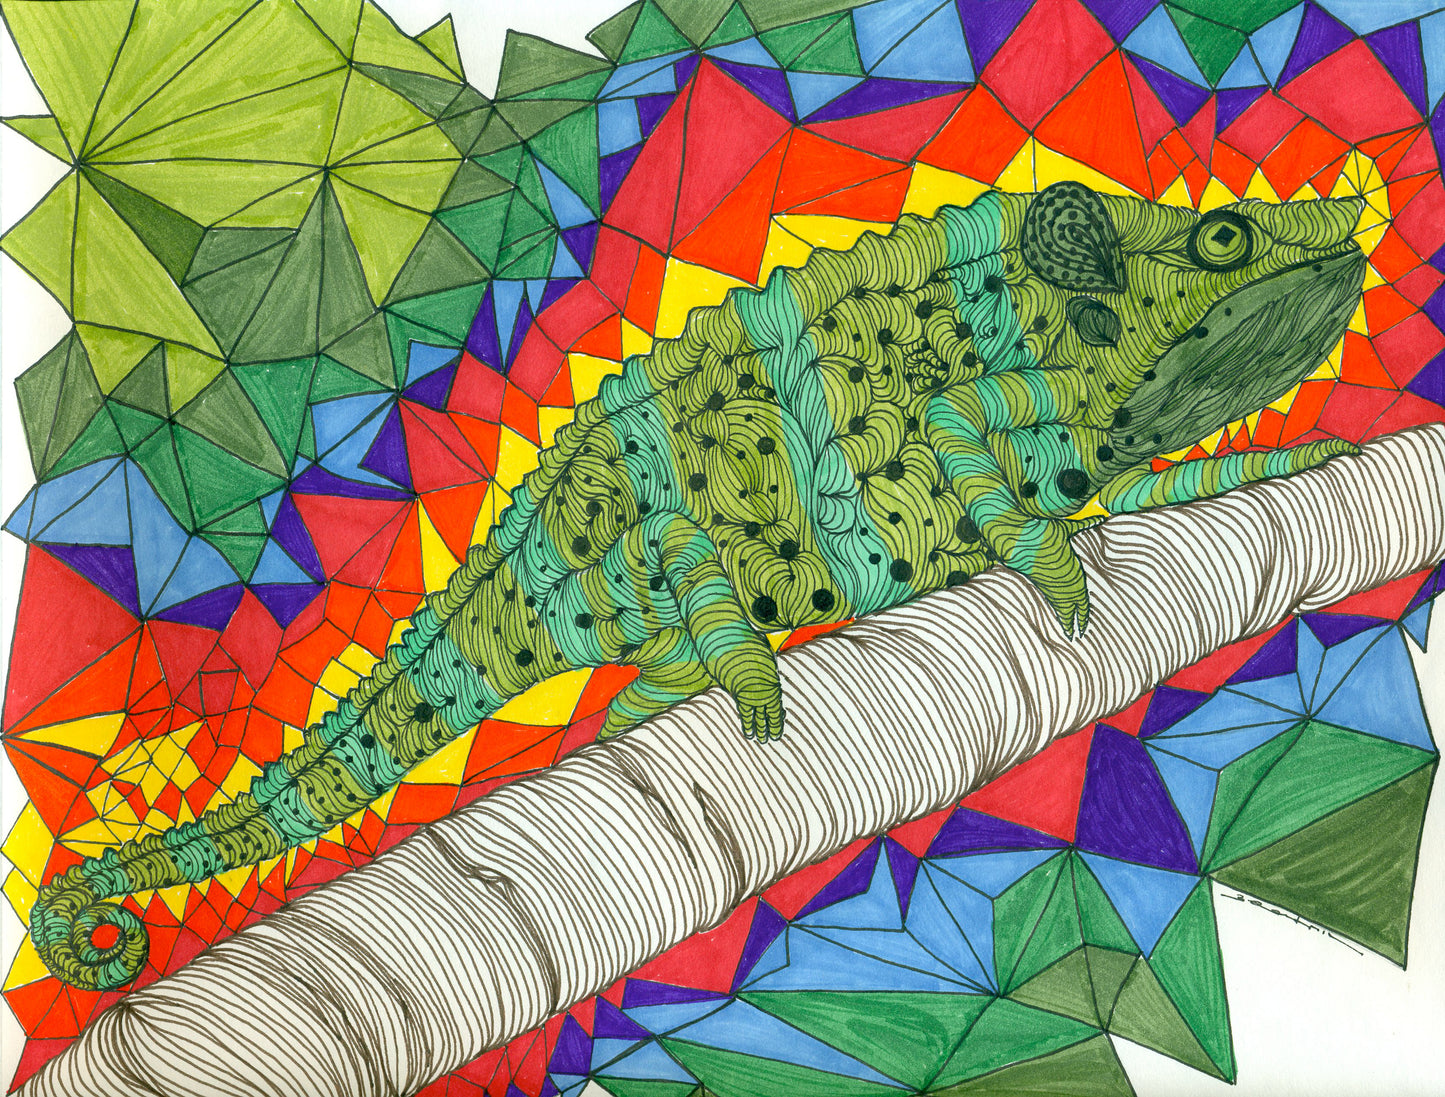 Niruldan el camaleón - Art print